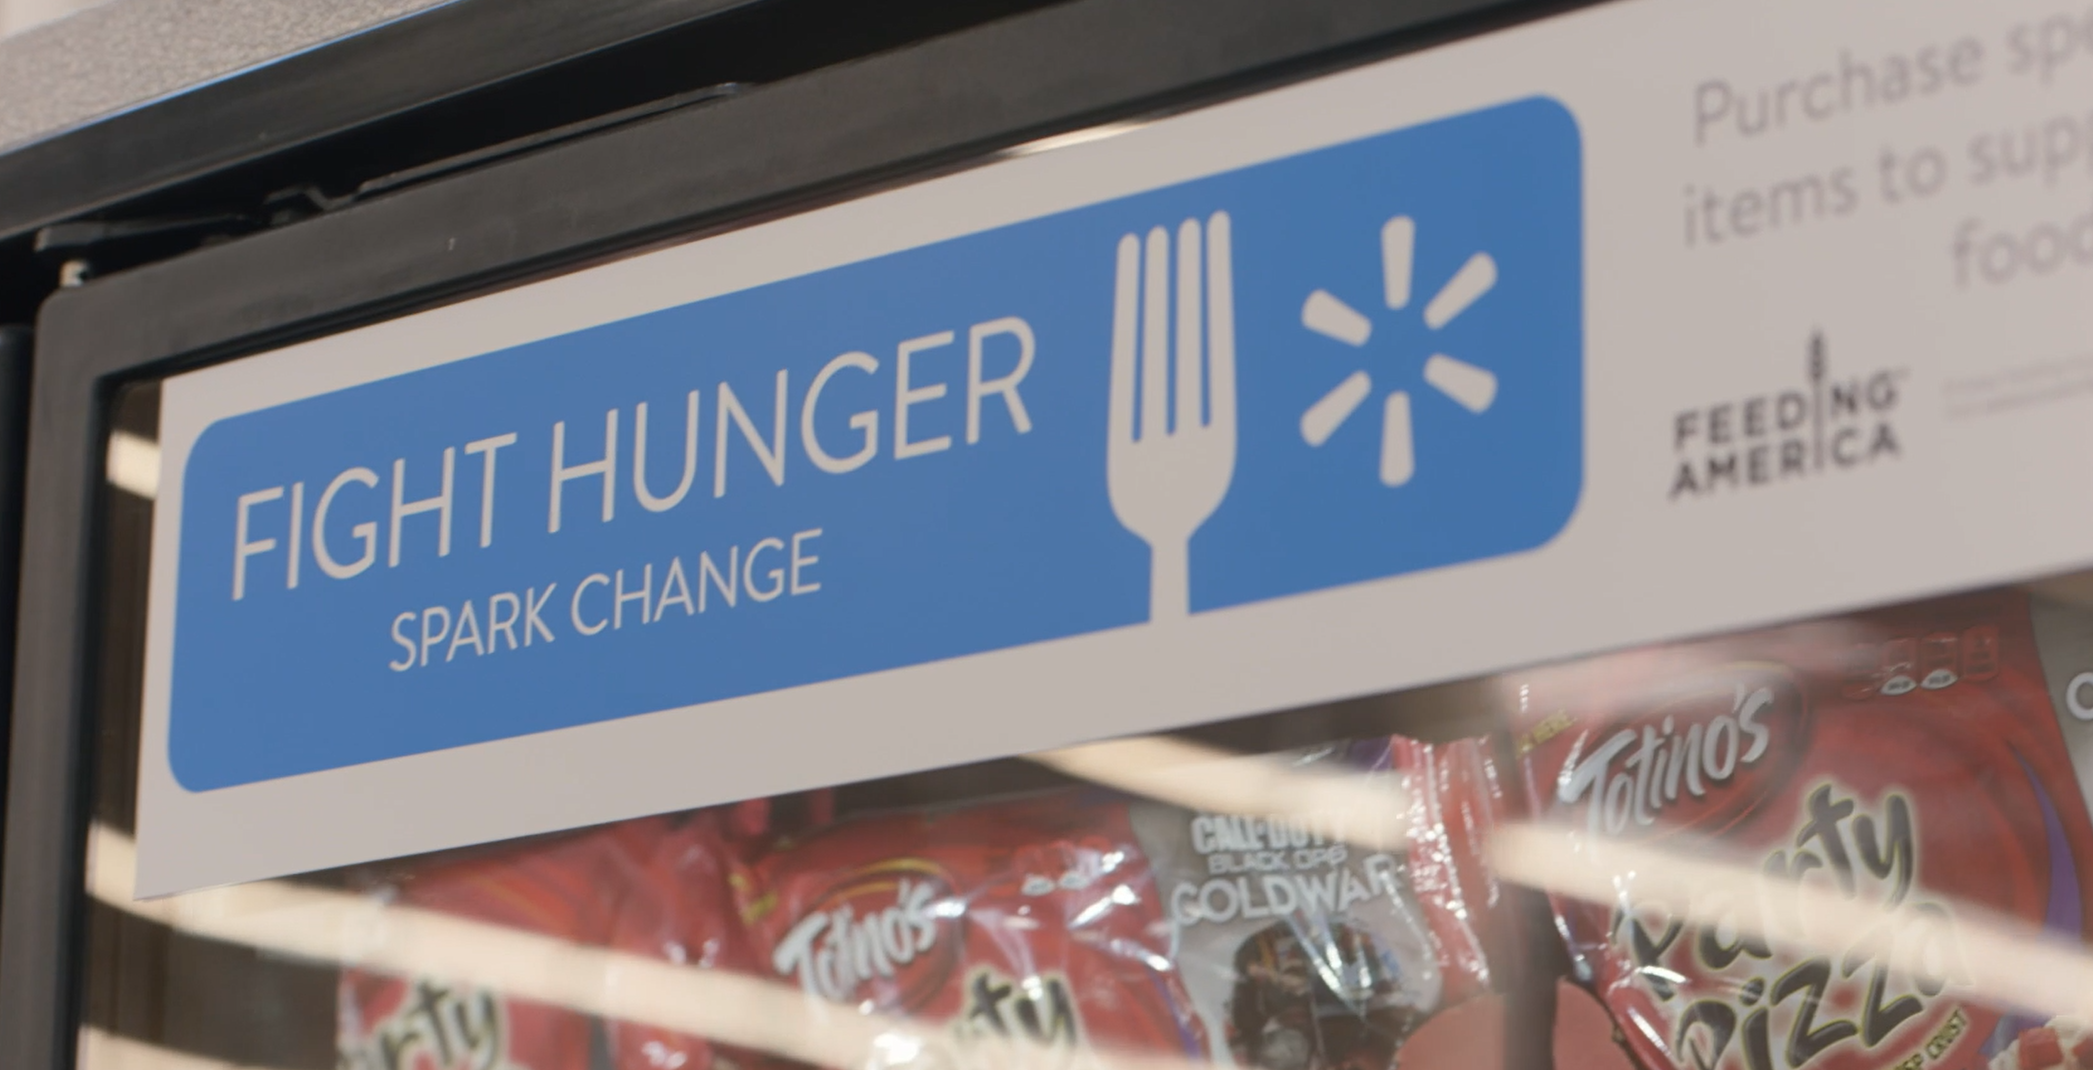 Walmart Fight Hunger. Spark Change. 2021